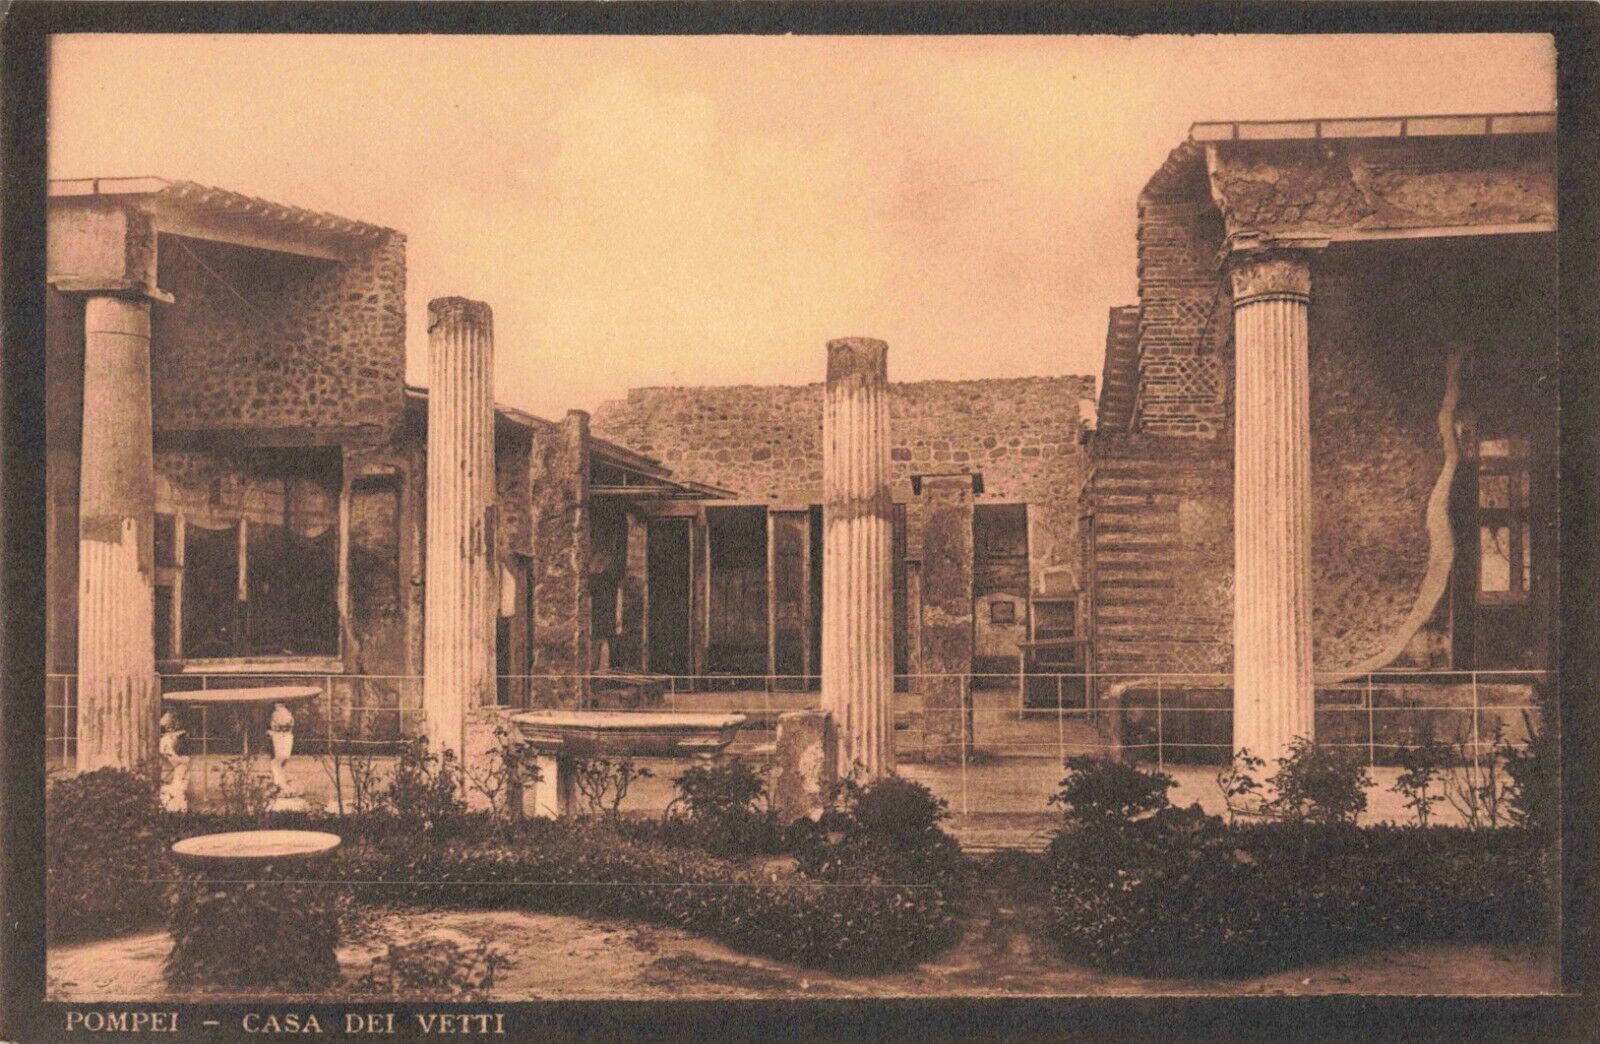 Pompei Italy, House of the Vettii, Vintage Postcard